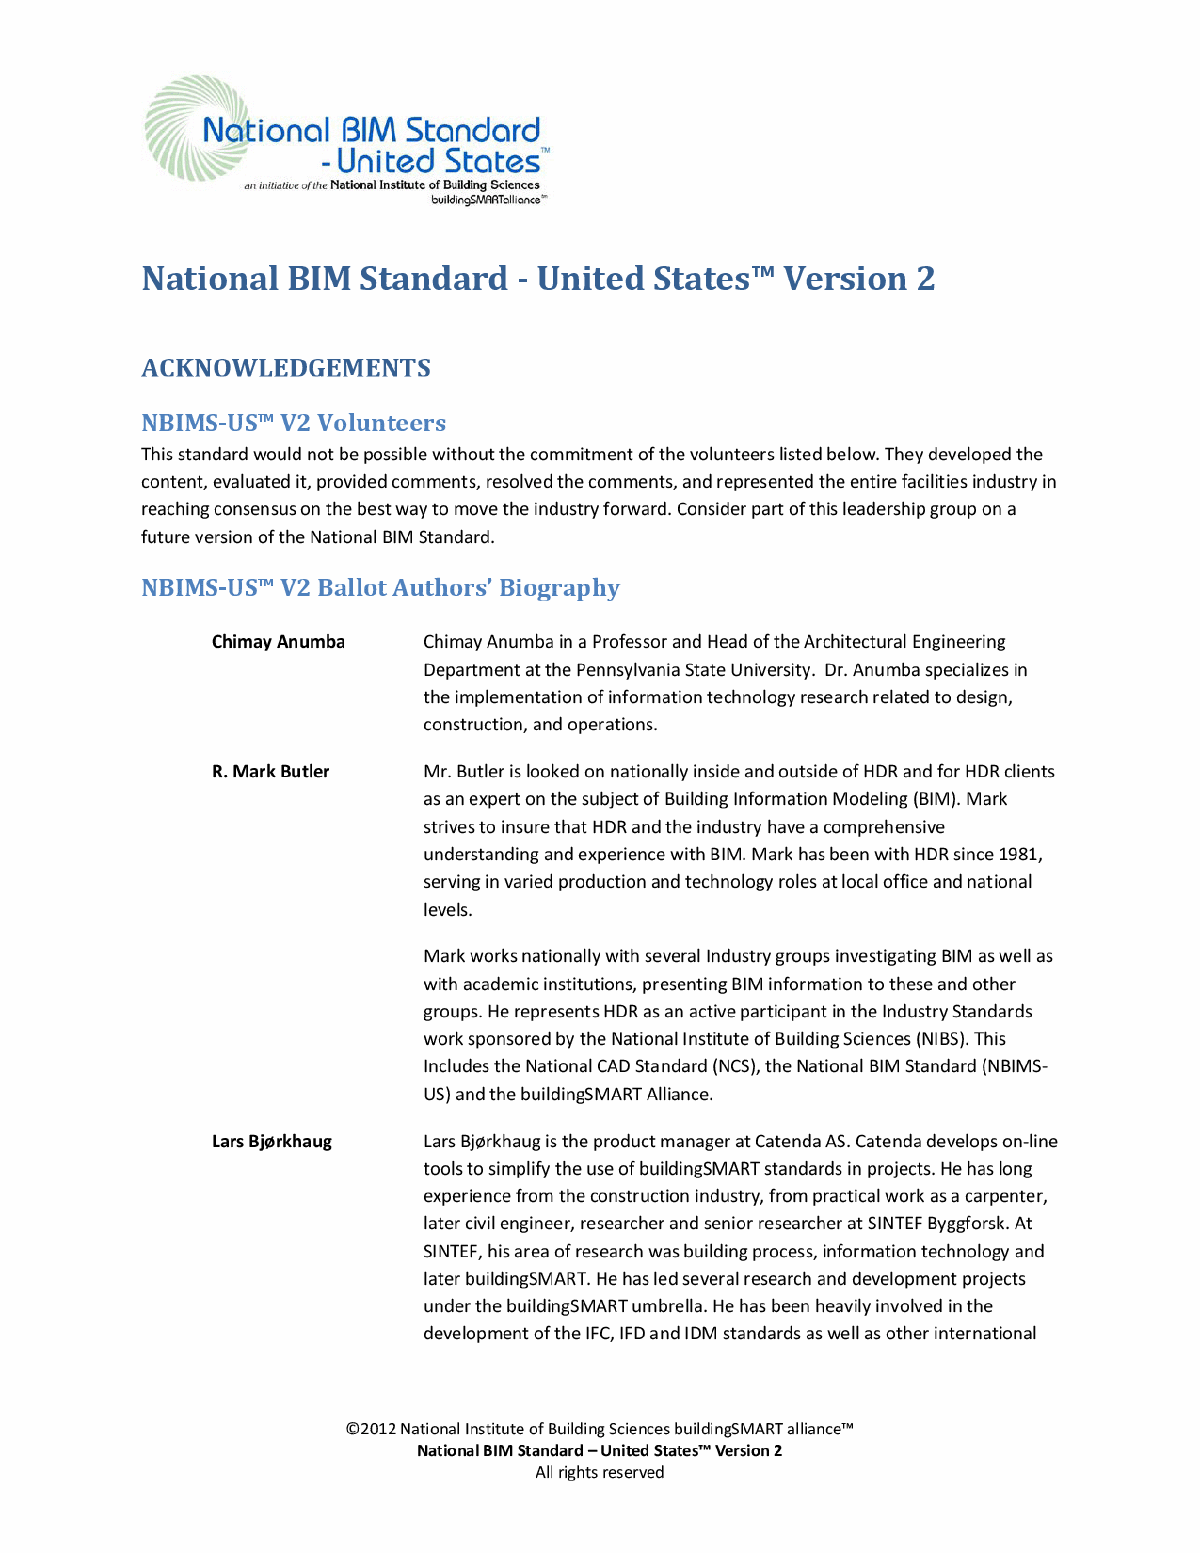 NBIMS-US2美国bim标准-图一